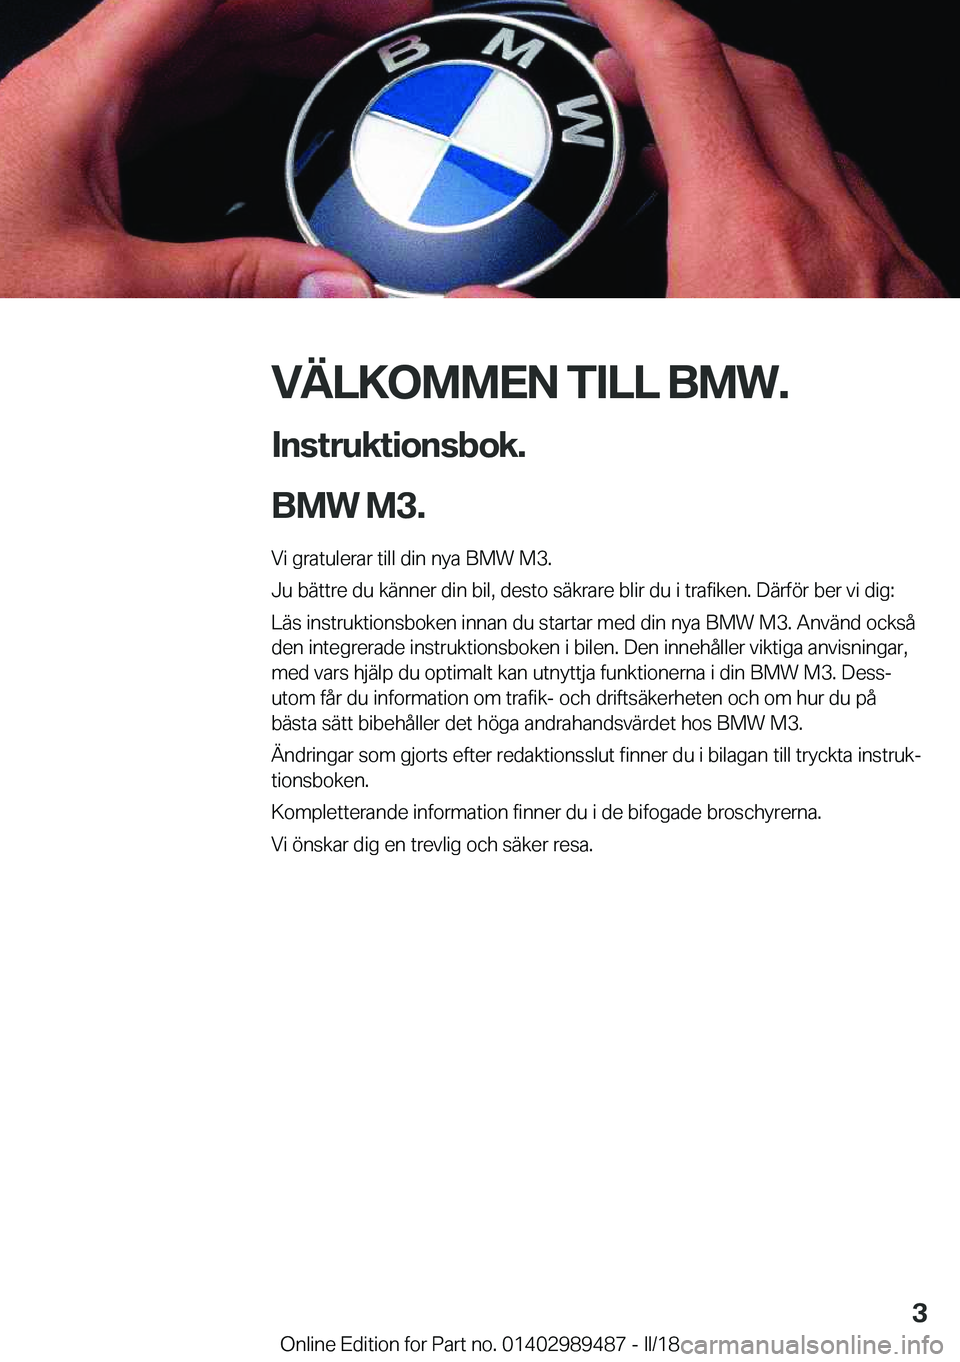 BMW M3 2018  InstruktionsbÖcker (in Swedish) �V�Ä�L�K�O�M�M�E�N��T�I�L�L��B�M�W�.�I�n�s�t�r�u�k�t�i�o�n�s�b�o�k�.
�B�M�W��M�3�.
�V�i� �g�r�a�t�u�l�e�r�a�r� �t�i�l�l� �d�i�n� �n�y�a� �B�M�W� �M�3�.
�J�u� �b�ä�t�t�r�e� �d�u� �k�ä�n�n�e�r� �d